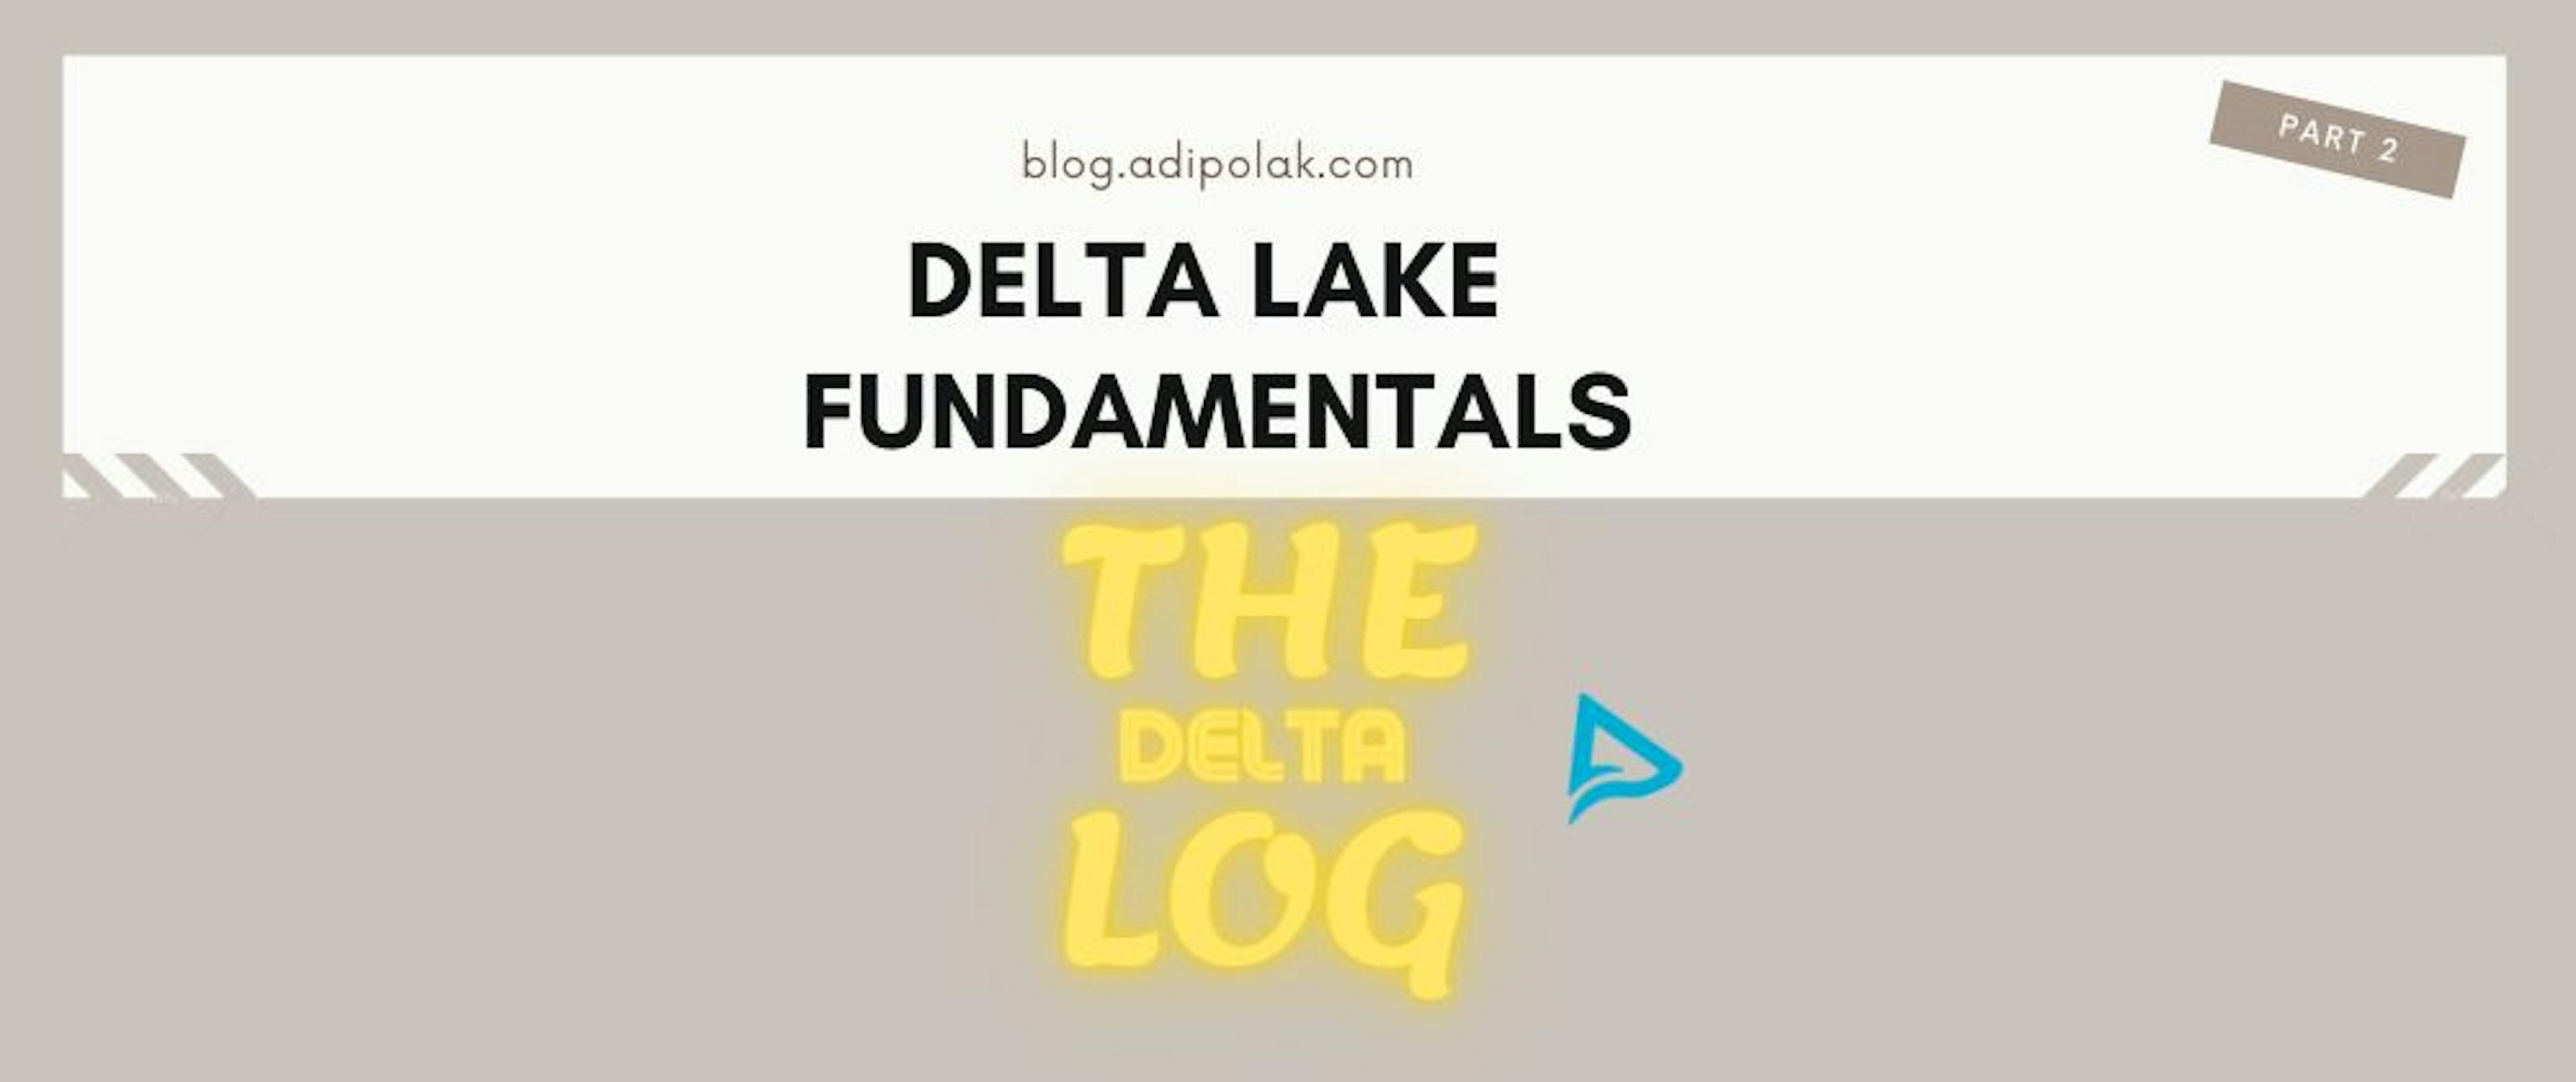 /the-deltalog-fundamentals-of-delta-lake-part-2-nu2933fm feature image